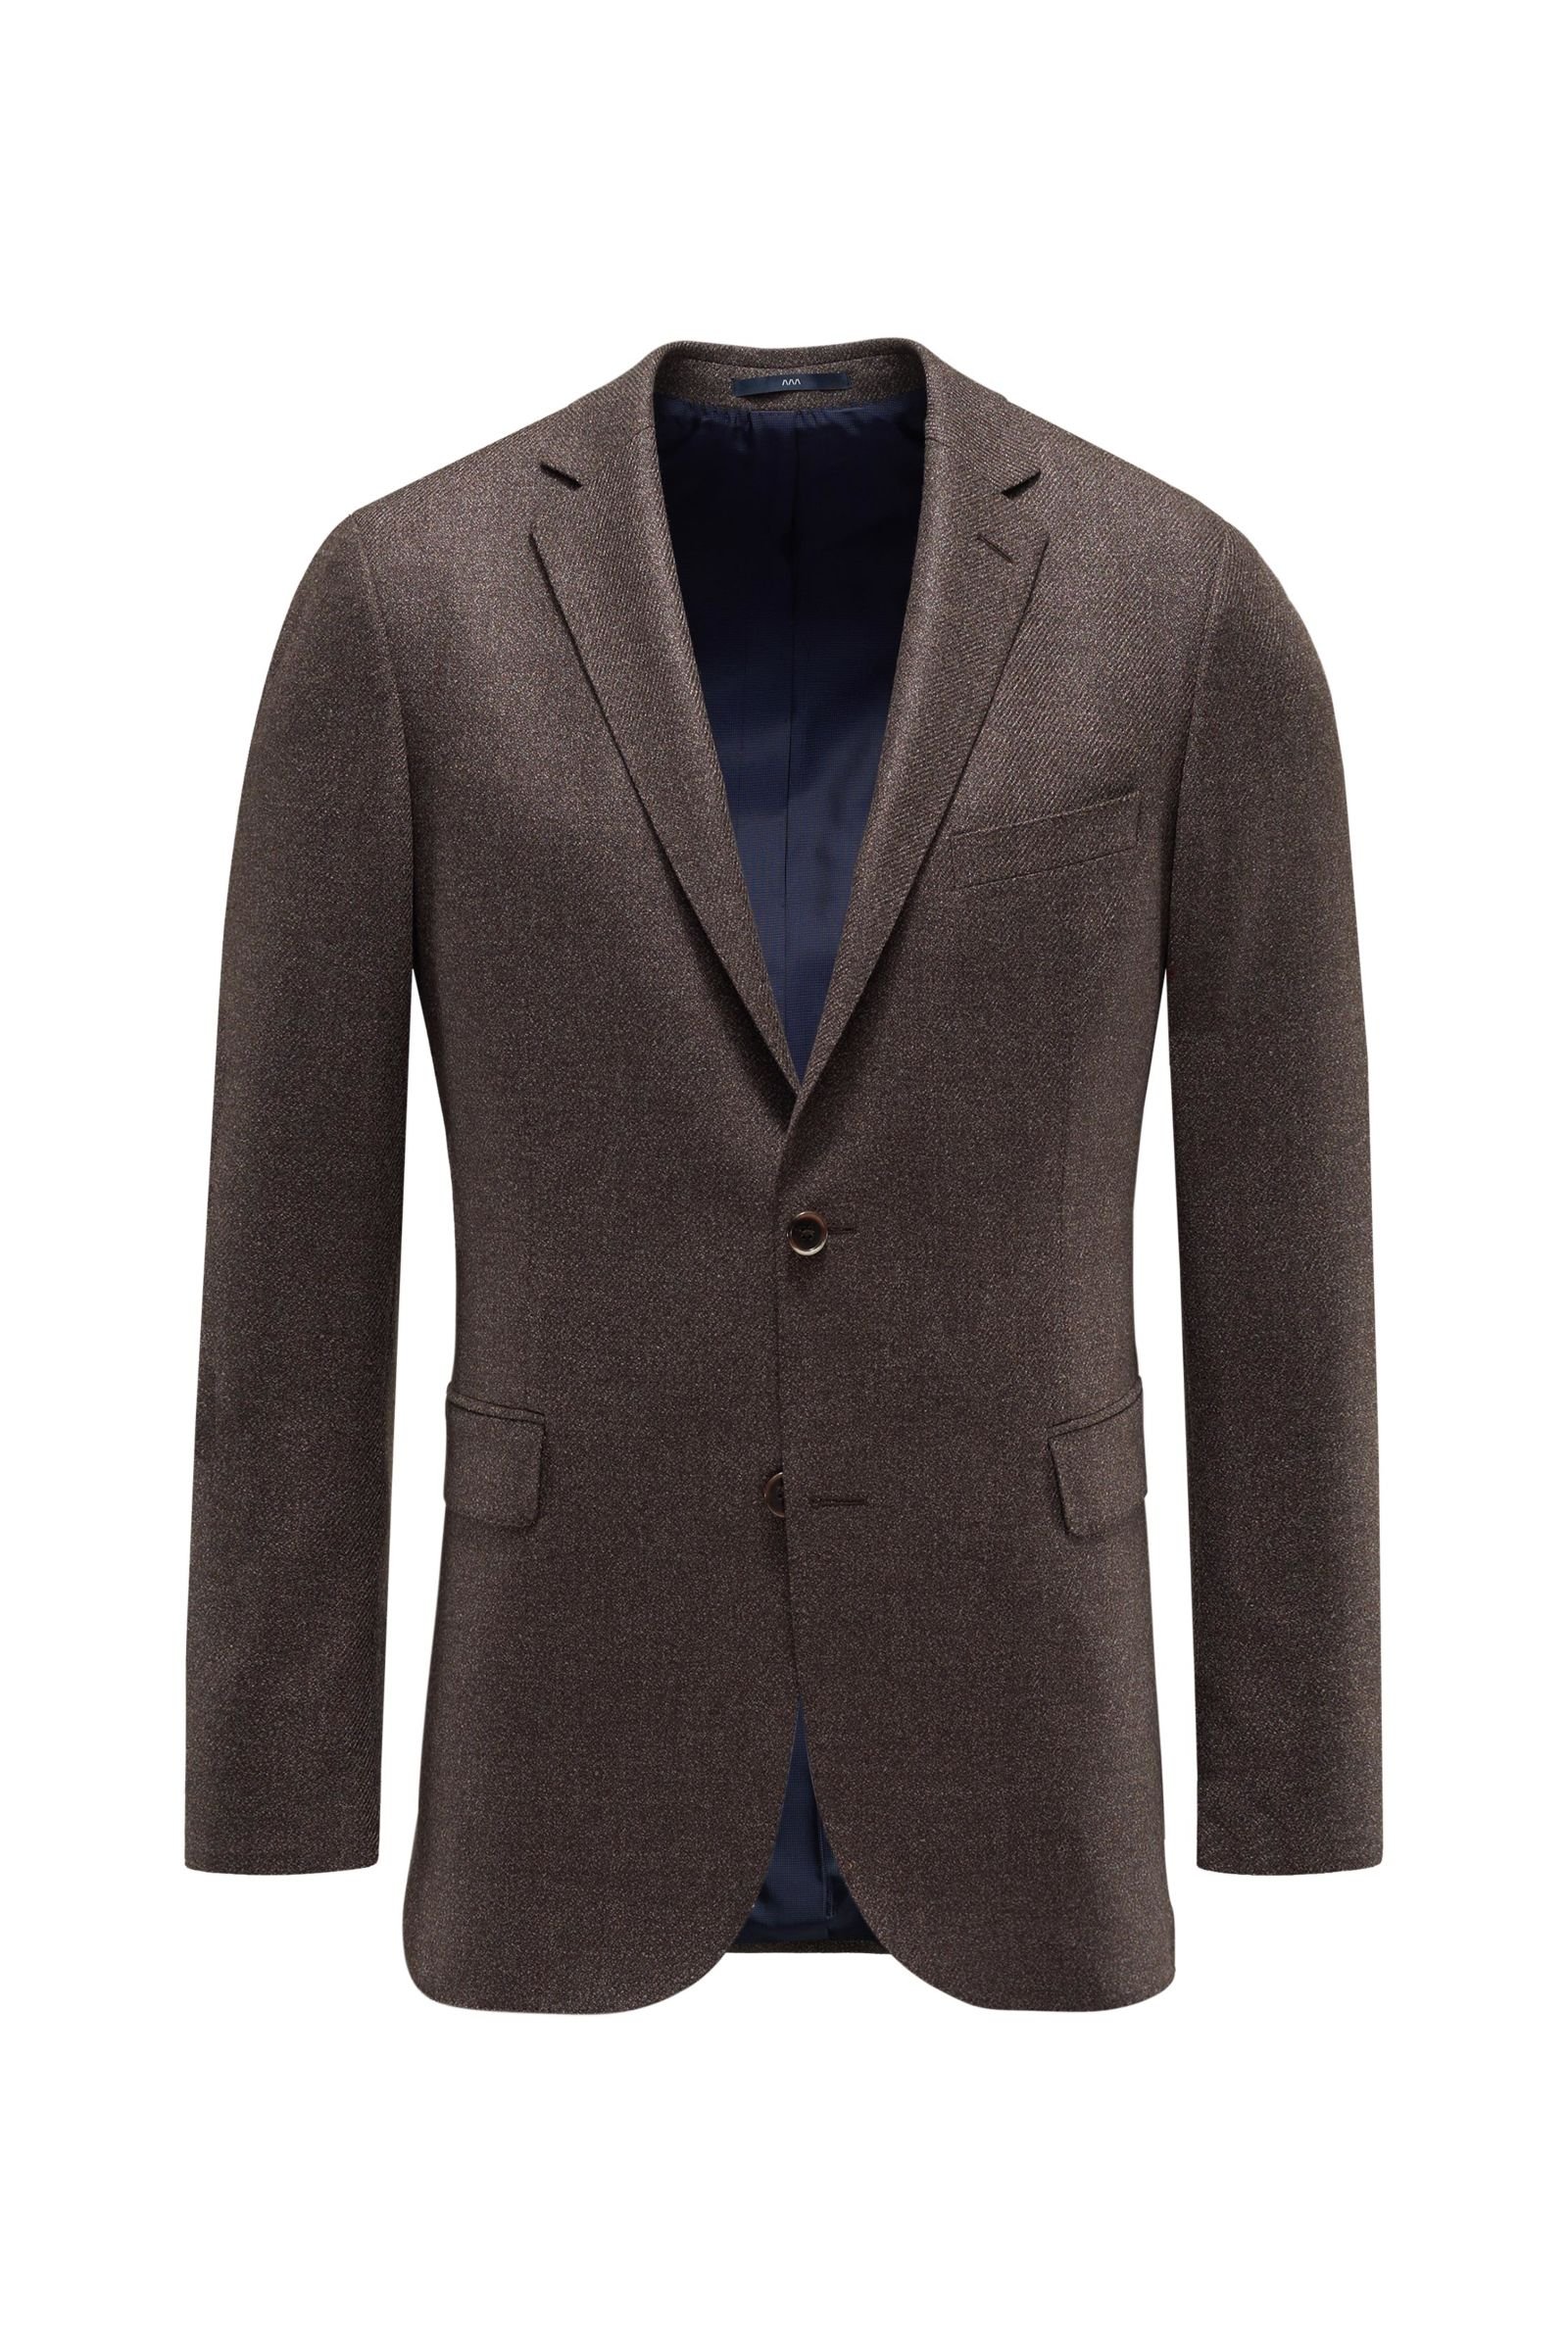 Smart-casual jacket dark brown patterned